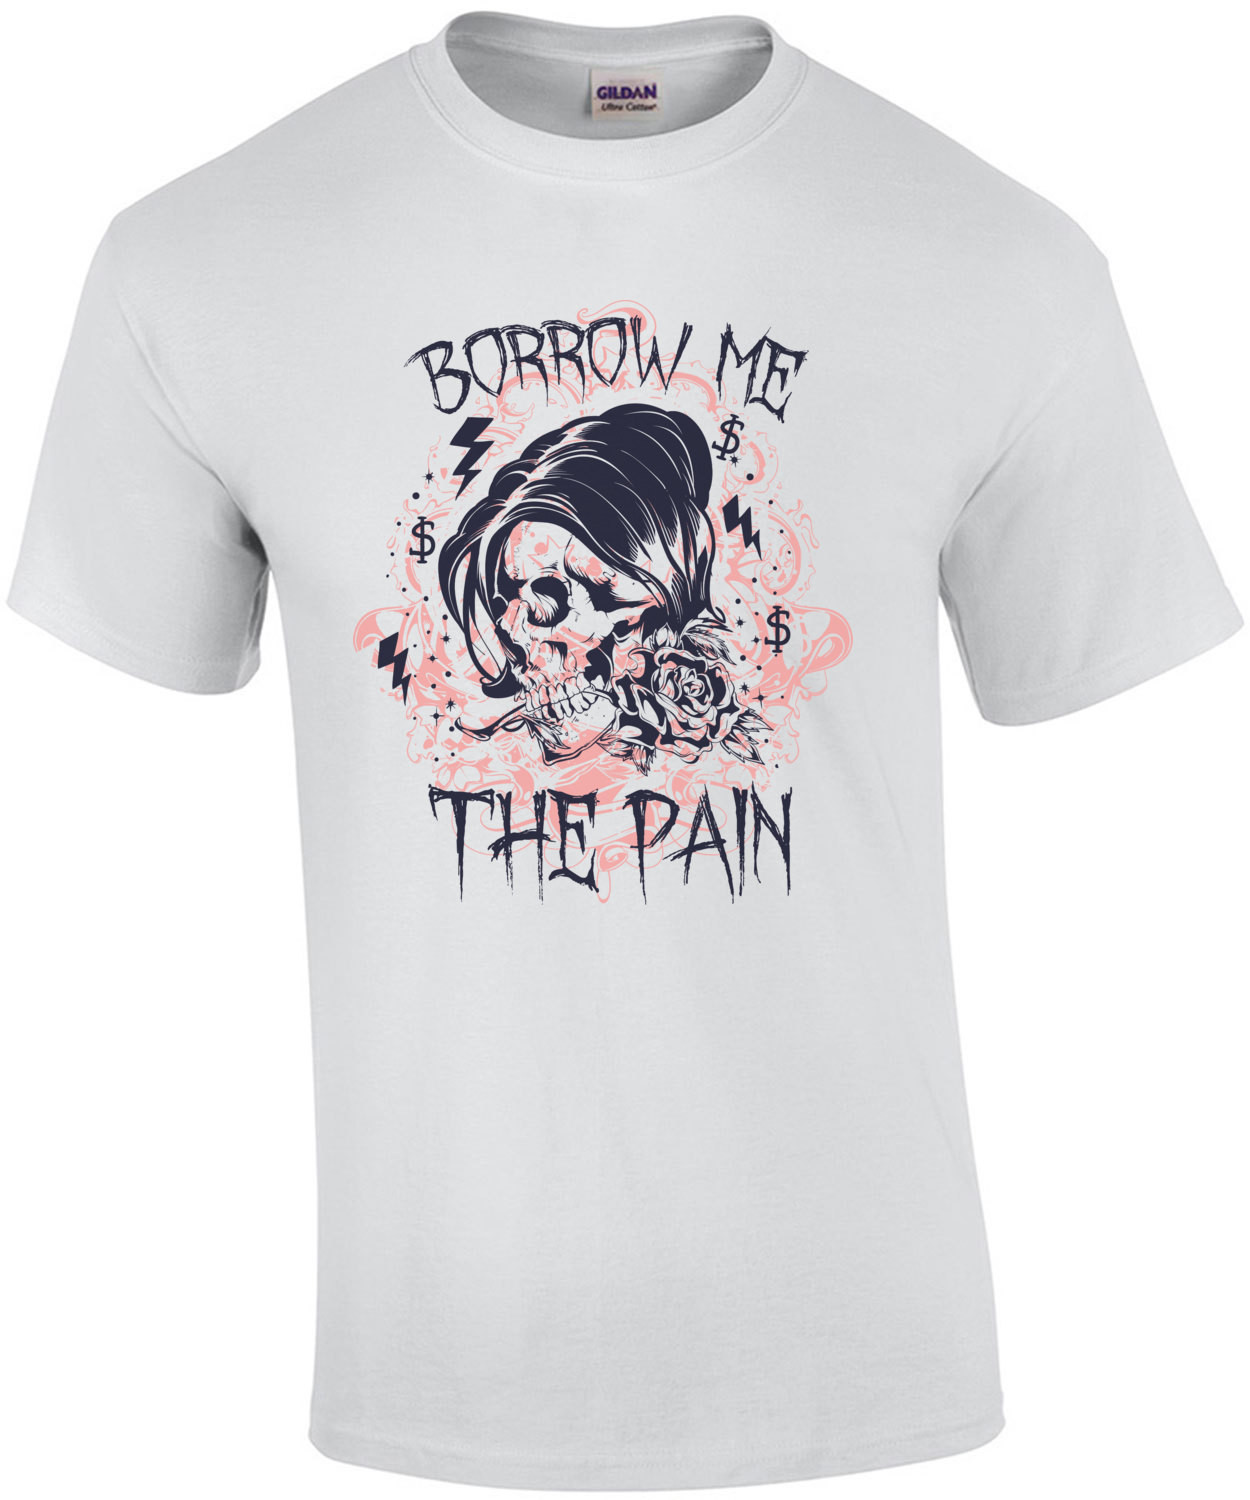 Borrow Me The Pain Gothic T-Shirt